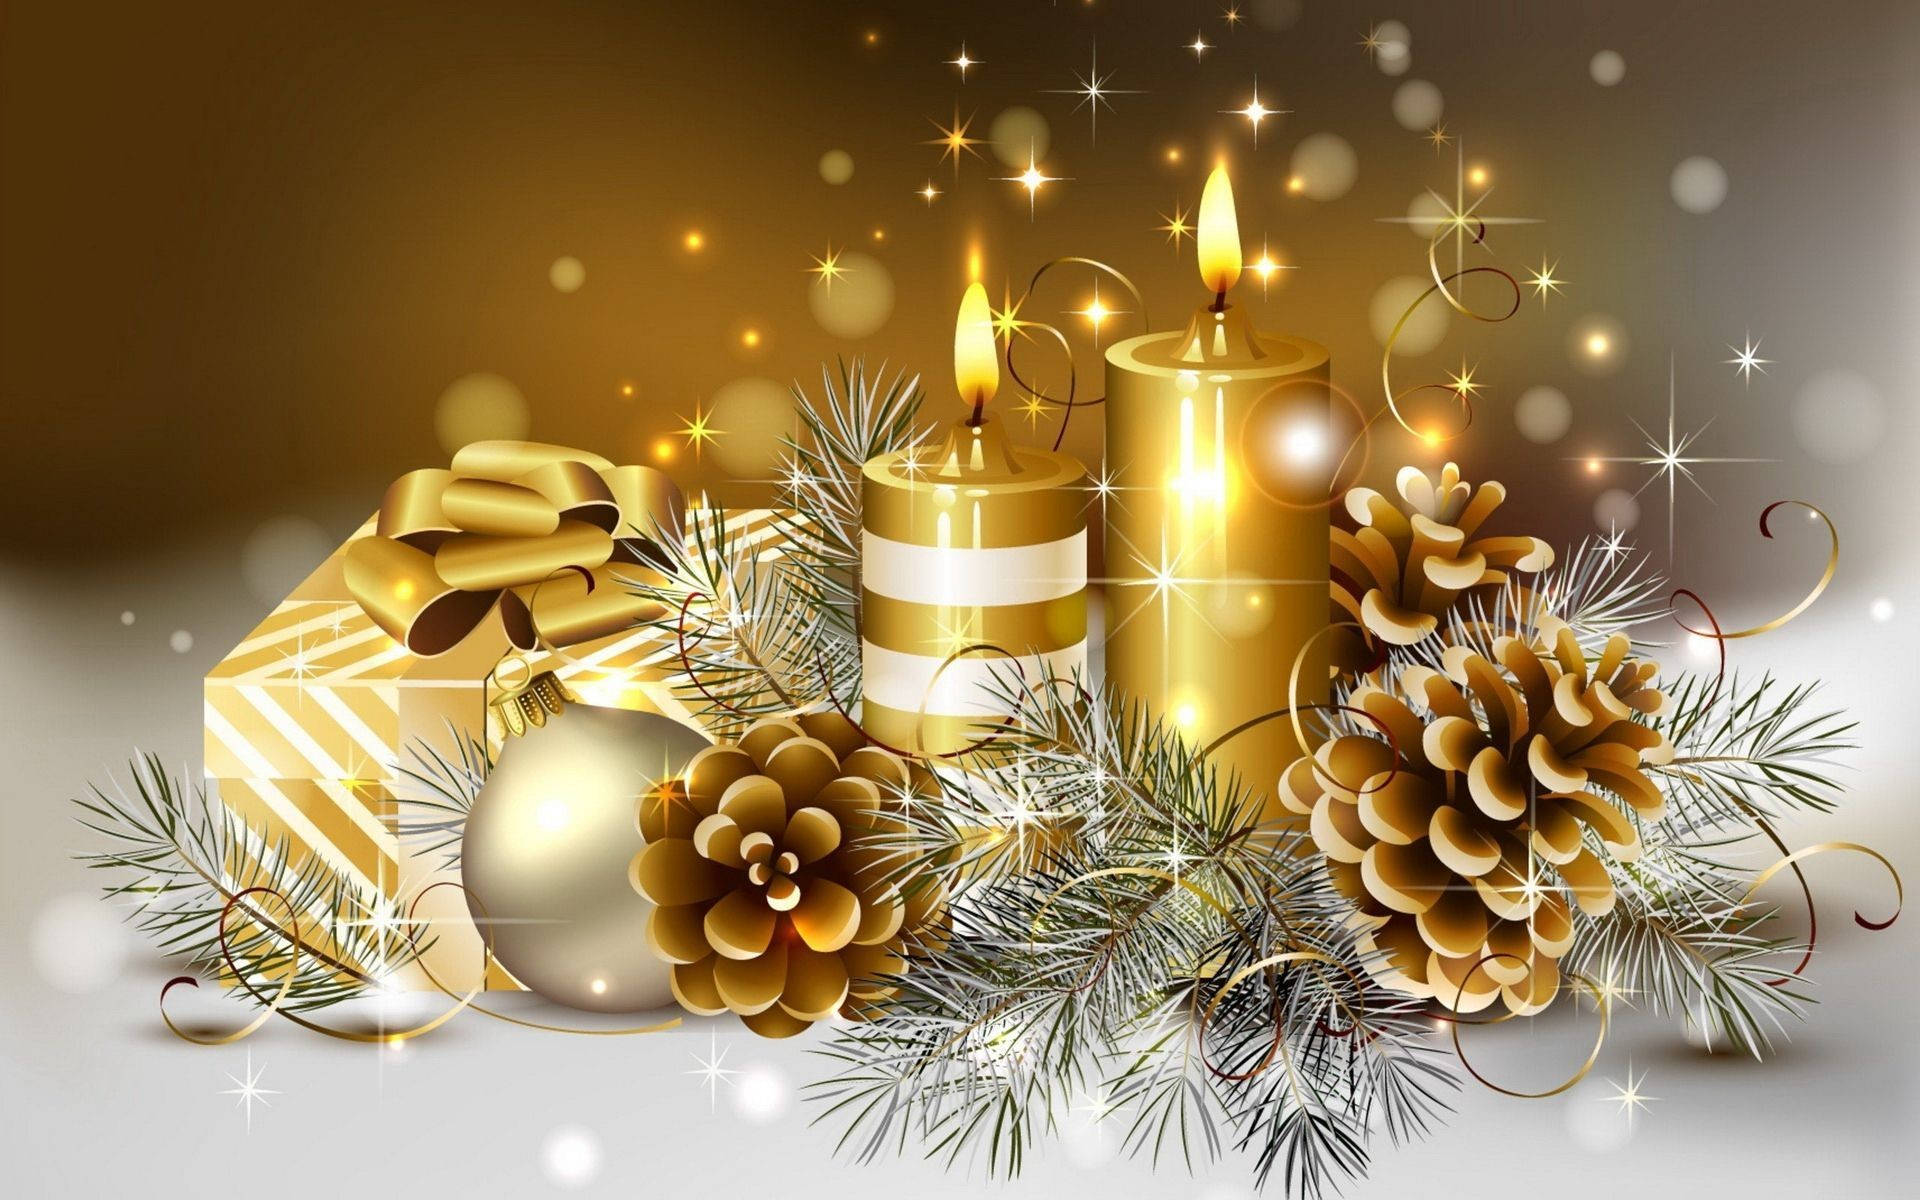 Merry Christmas Hd Golden Candles